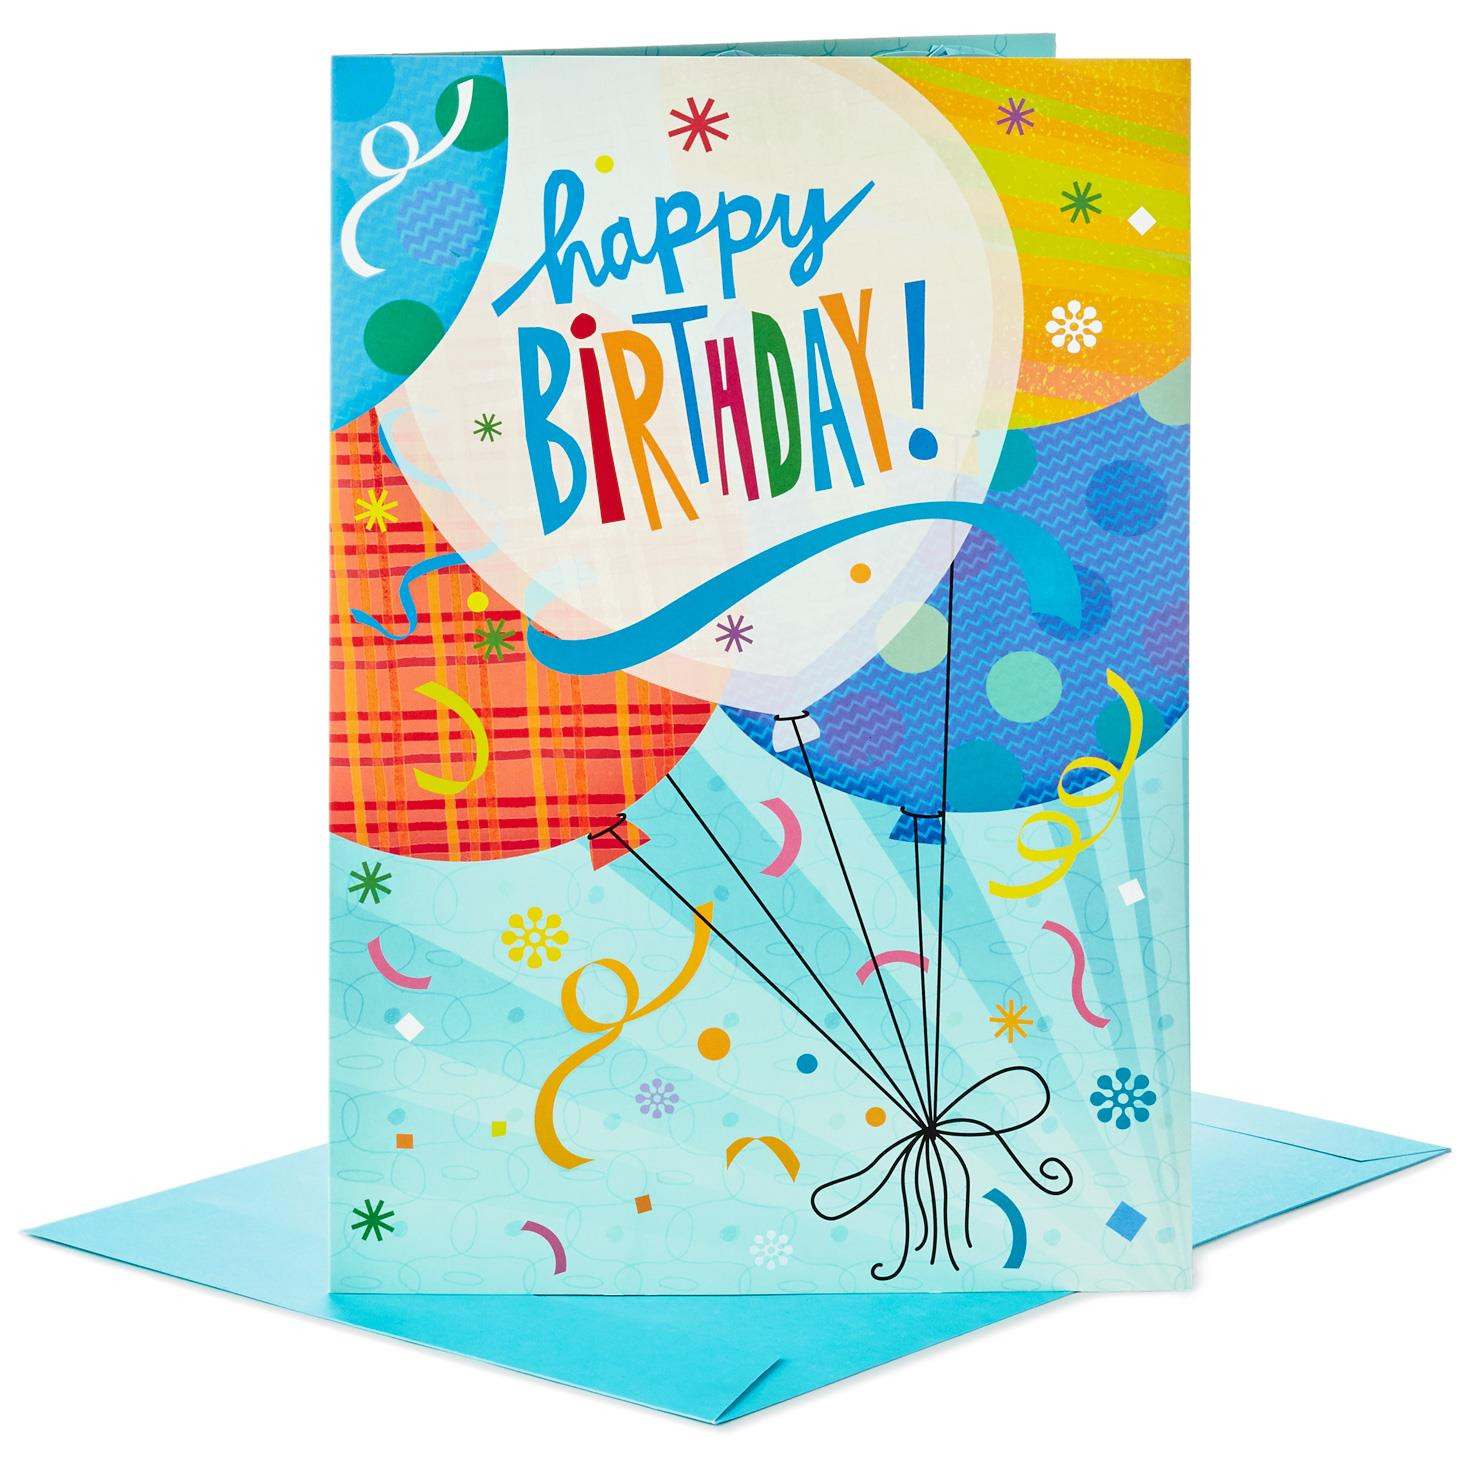 Jumbo Birthday Cards
 Balloons for Fun Pop Up Jumbo Birthday Card 16